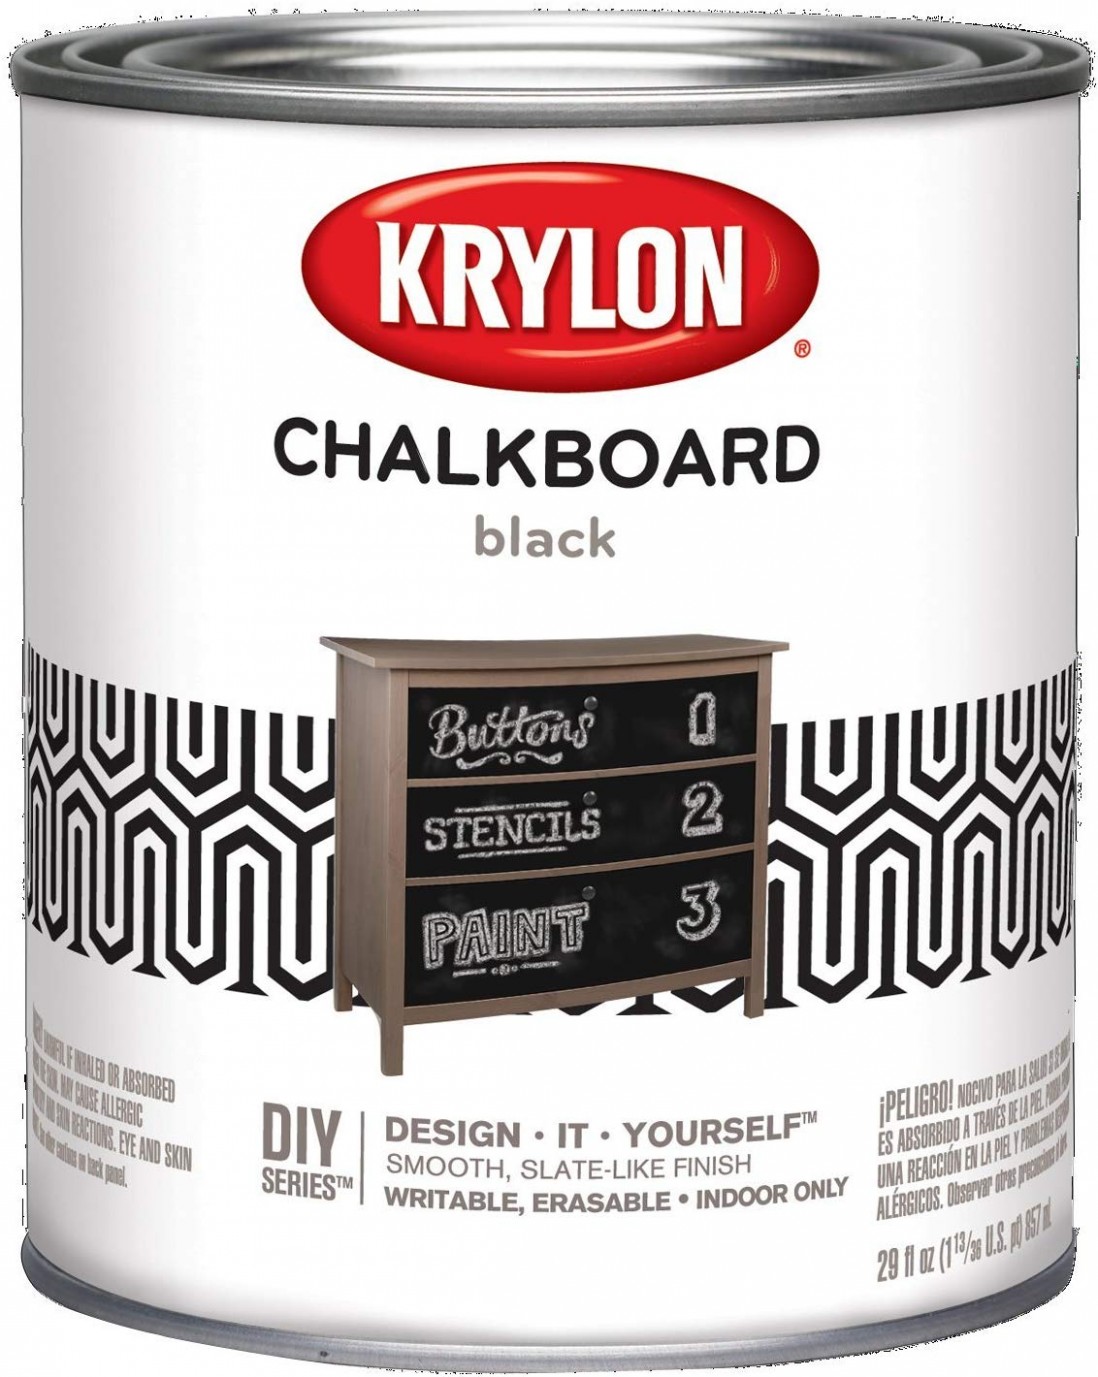 Krylon K7 Chalkboard Paint Special Purpose Brush On, Black, Quart Can I Paint Over Chalkboard Paint